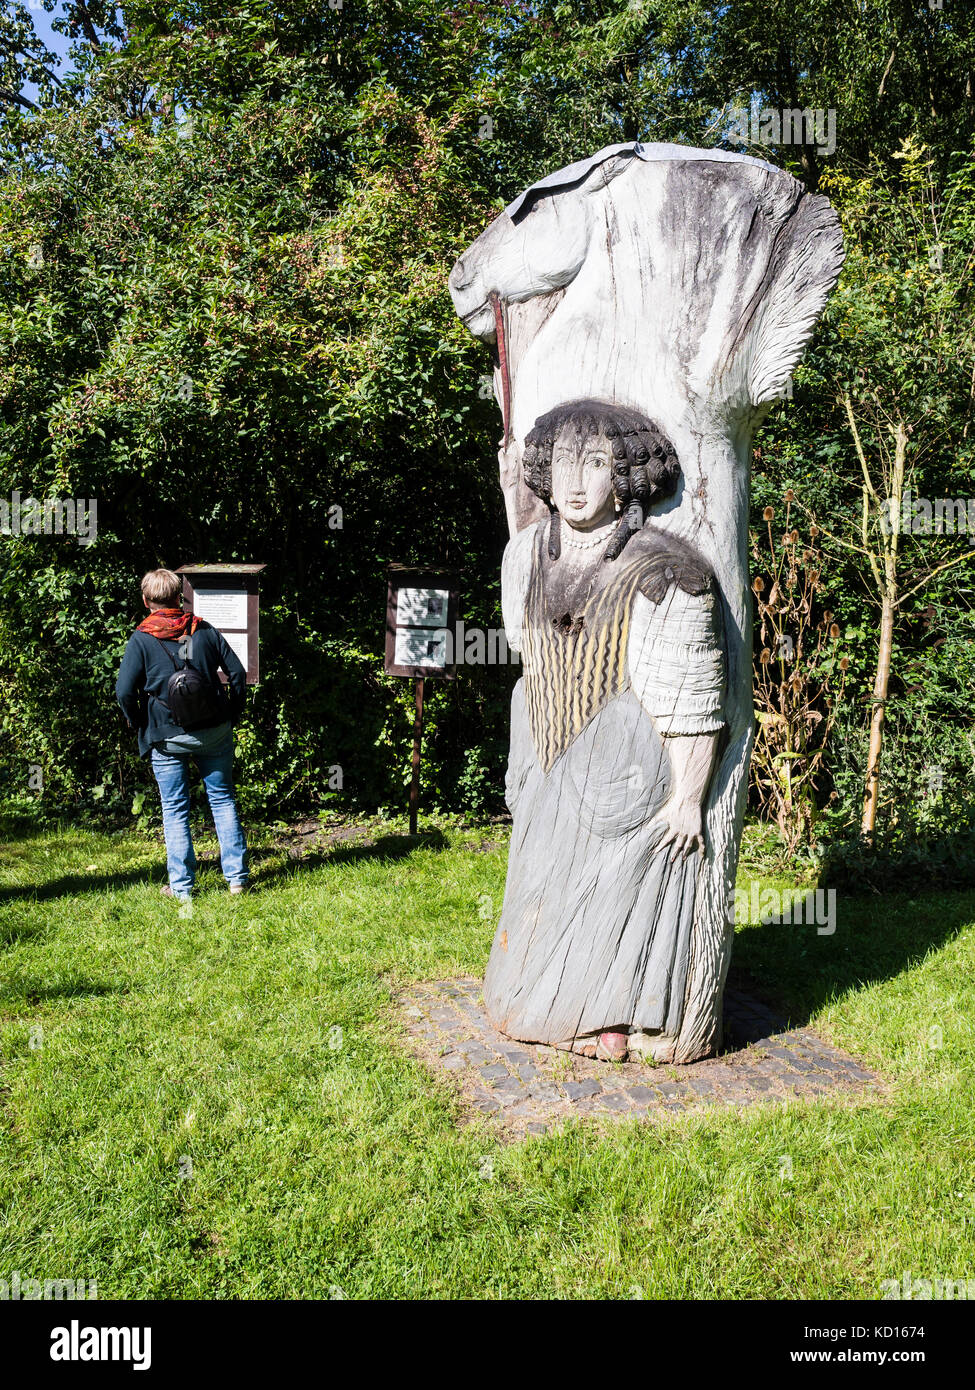 Park, wooden sculpture, Bieneninstitut, Honey bee institute, open house, open day for public, Celle, German Stock Photo